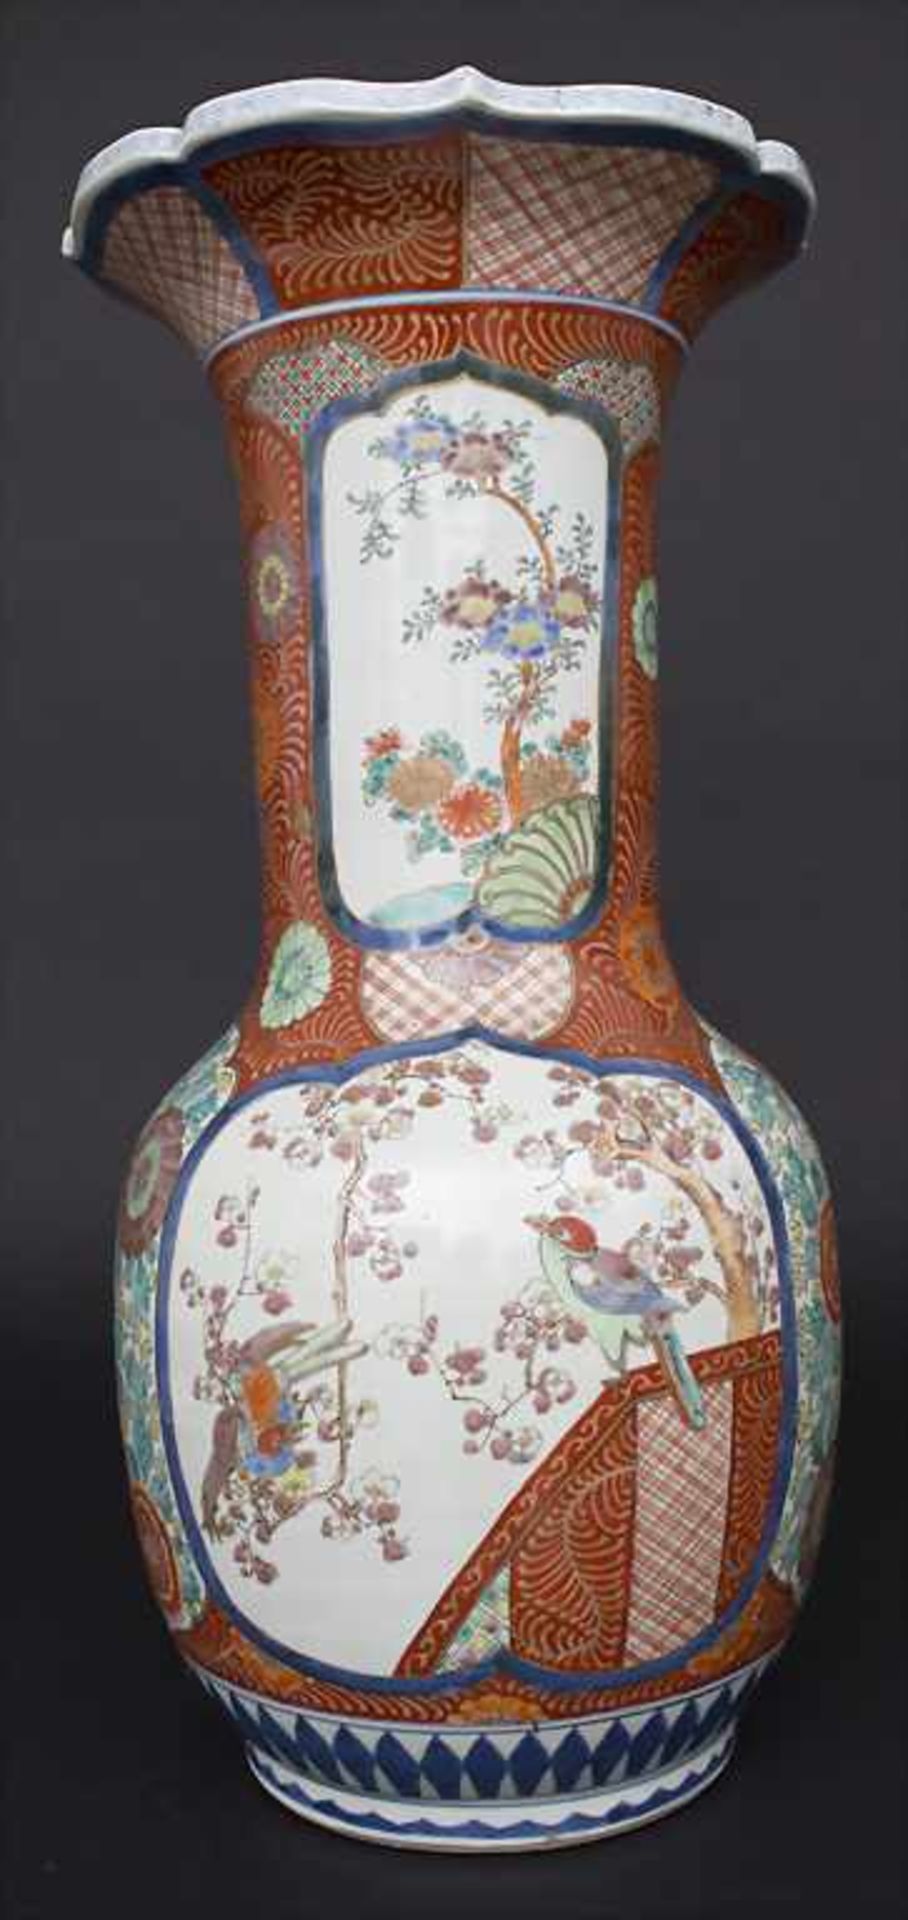 Bodenvase mit Vogel-Blütendekor / A floor vase with birds and flowers, China, um 1900Material: